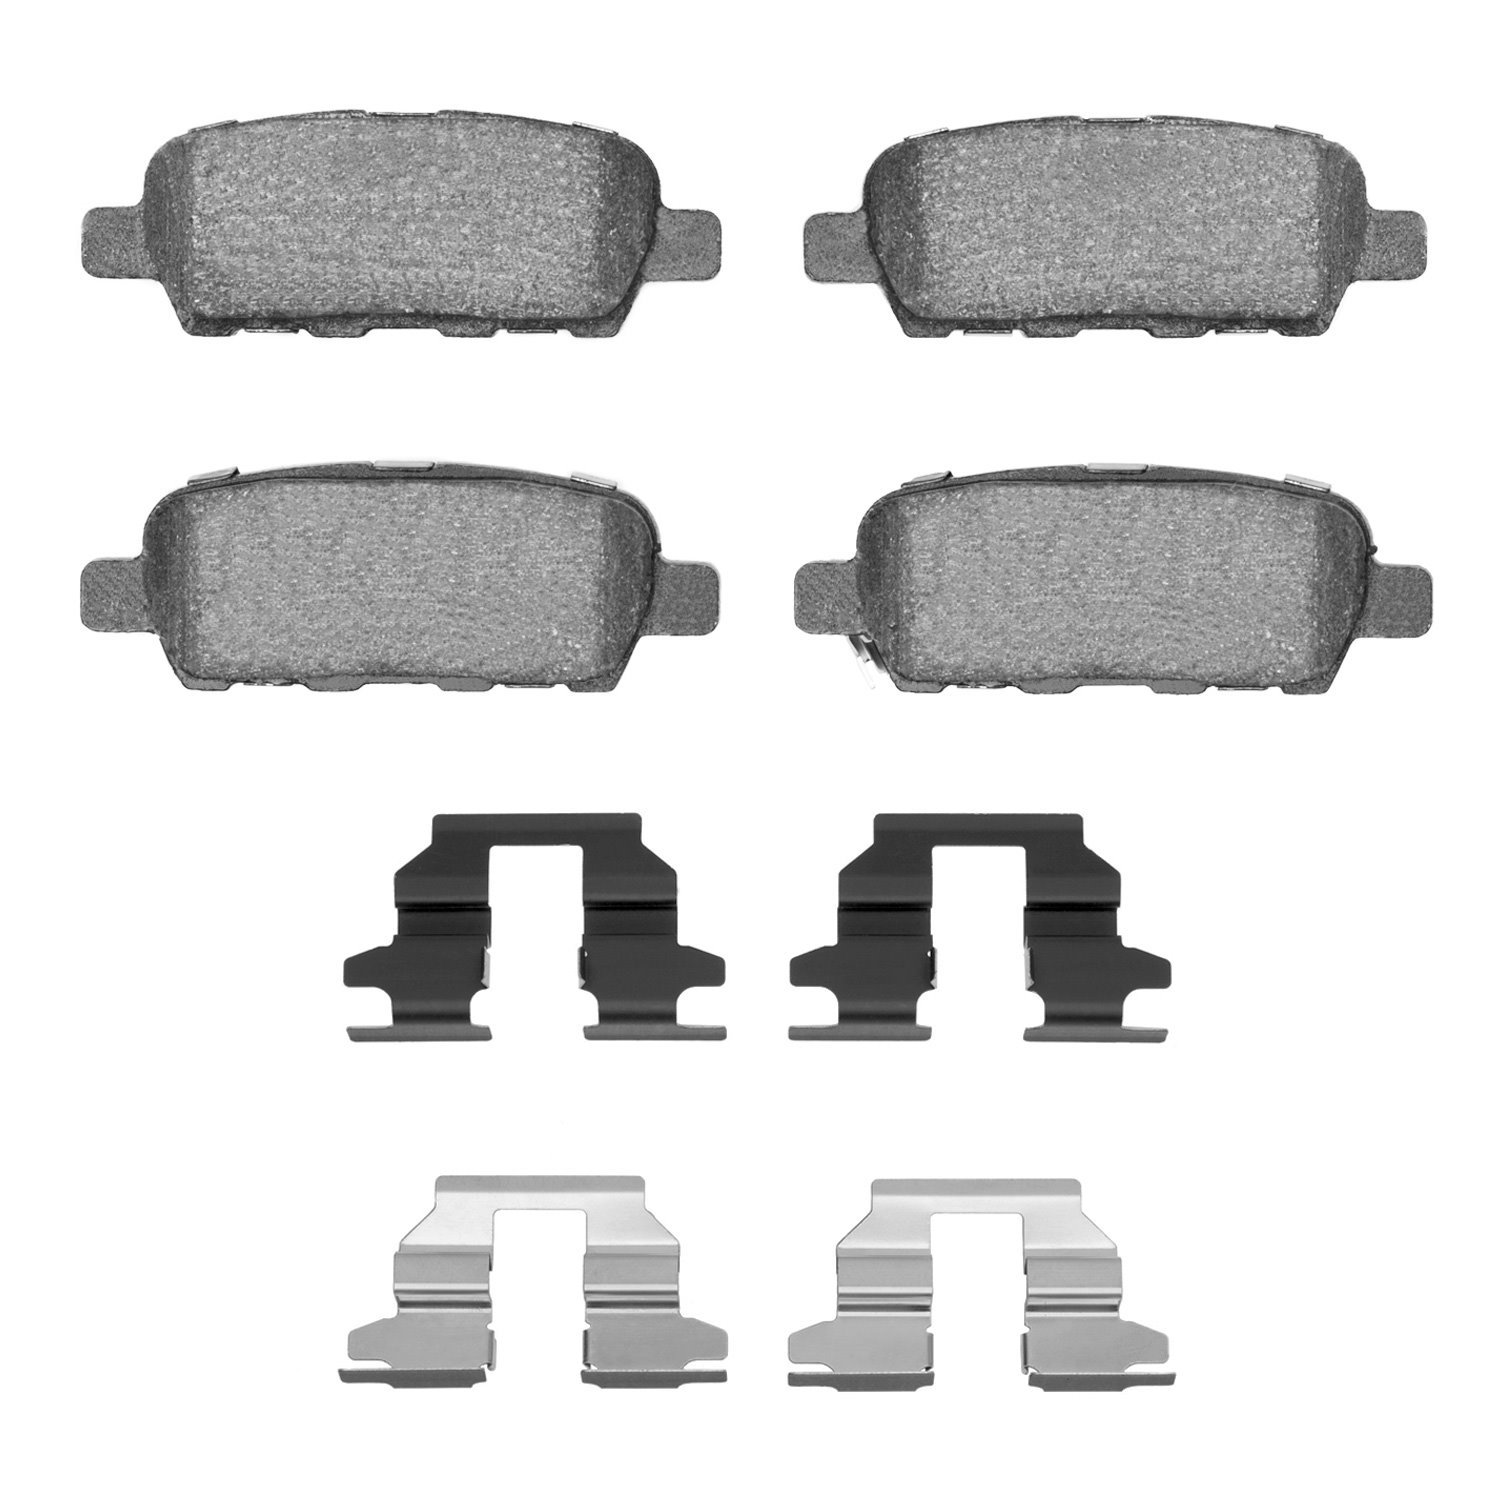 1600-0905-01 5000 Euro Ceramic Brake Pads & Hardware Kit, Fits Select Multiple Makes/Models, Position: Rear